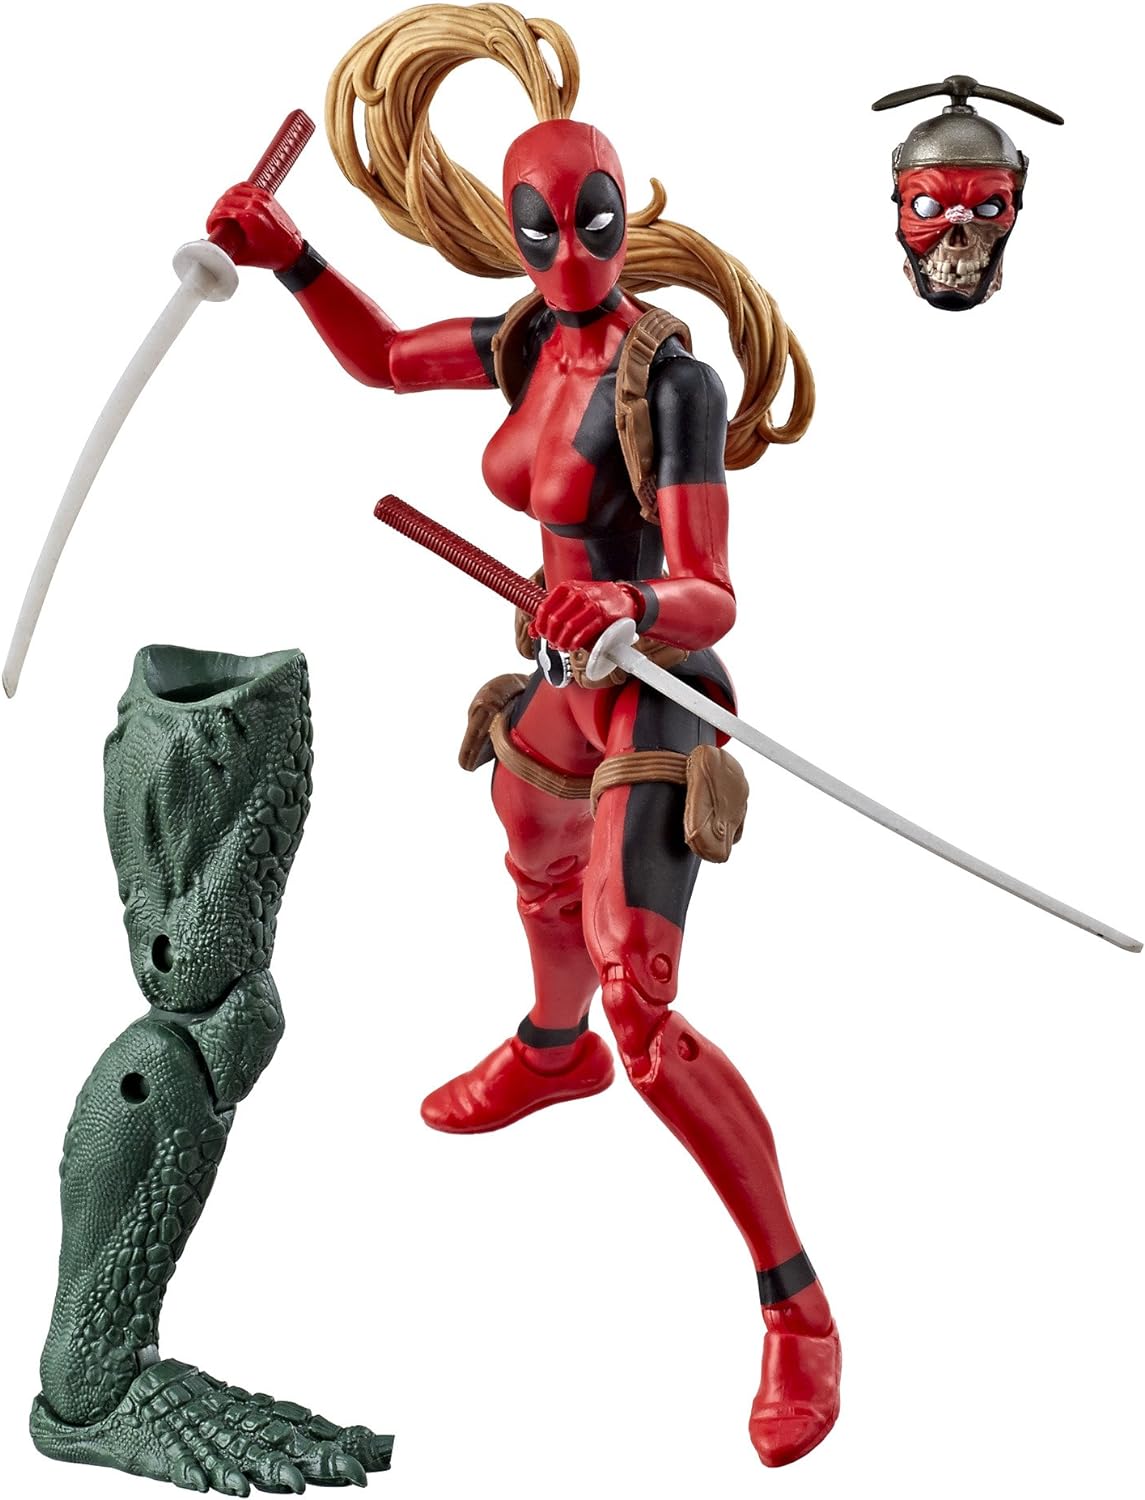 MARVAL Lady Deadpool Action Figure - Lady Deadpool Marvel Legends Series - 6 Inch Action Figure